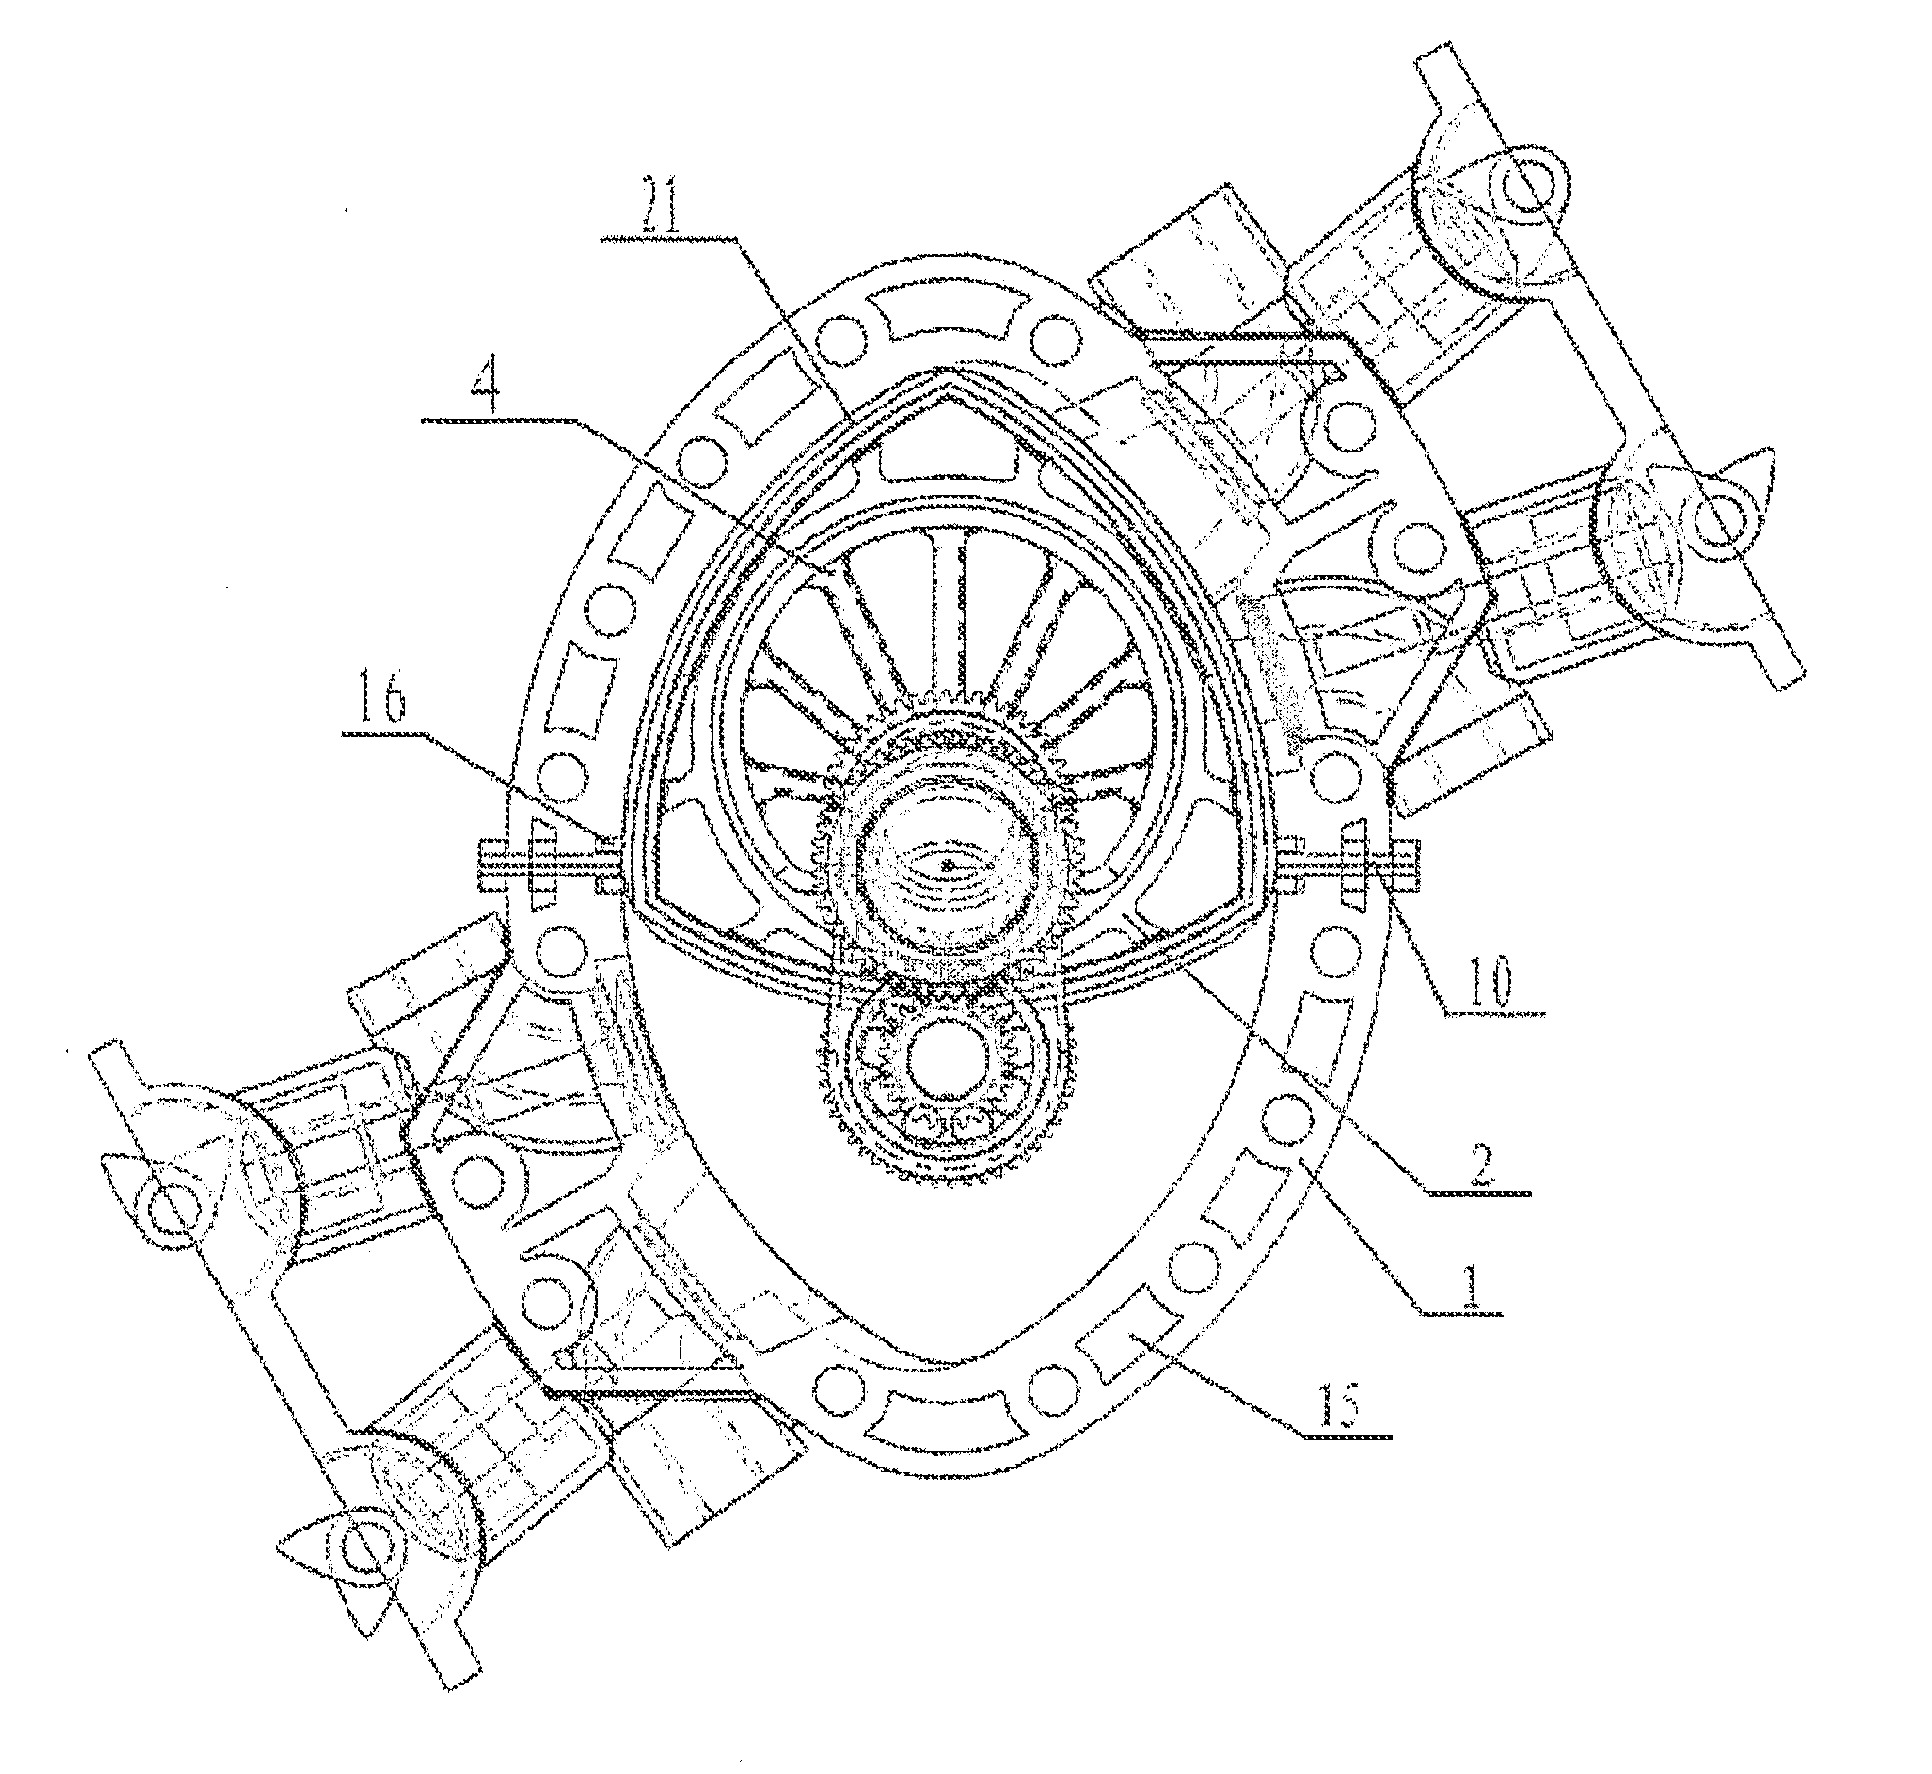 Olive-shaped rotary engine